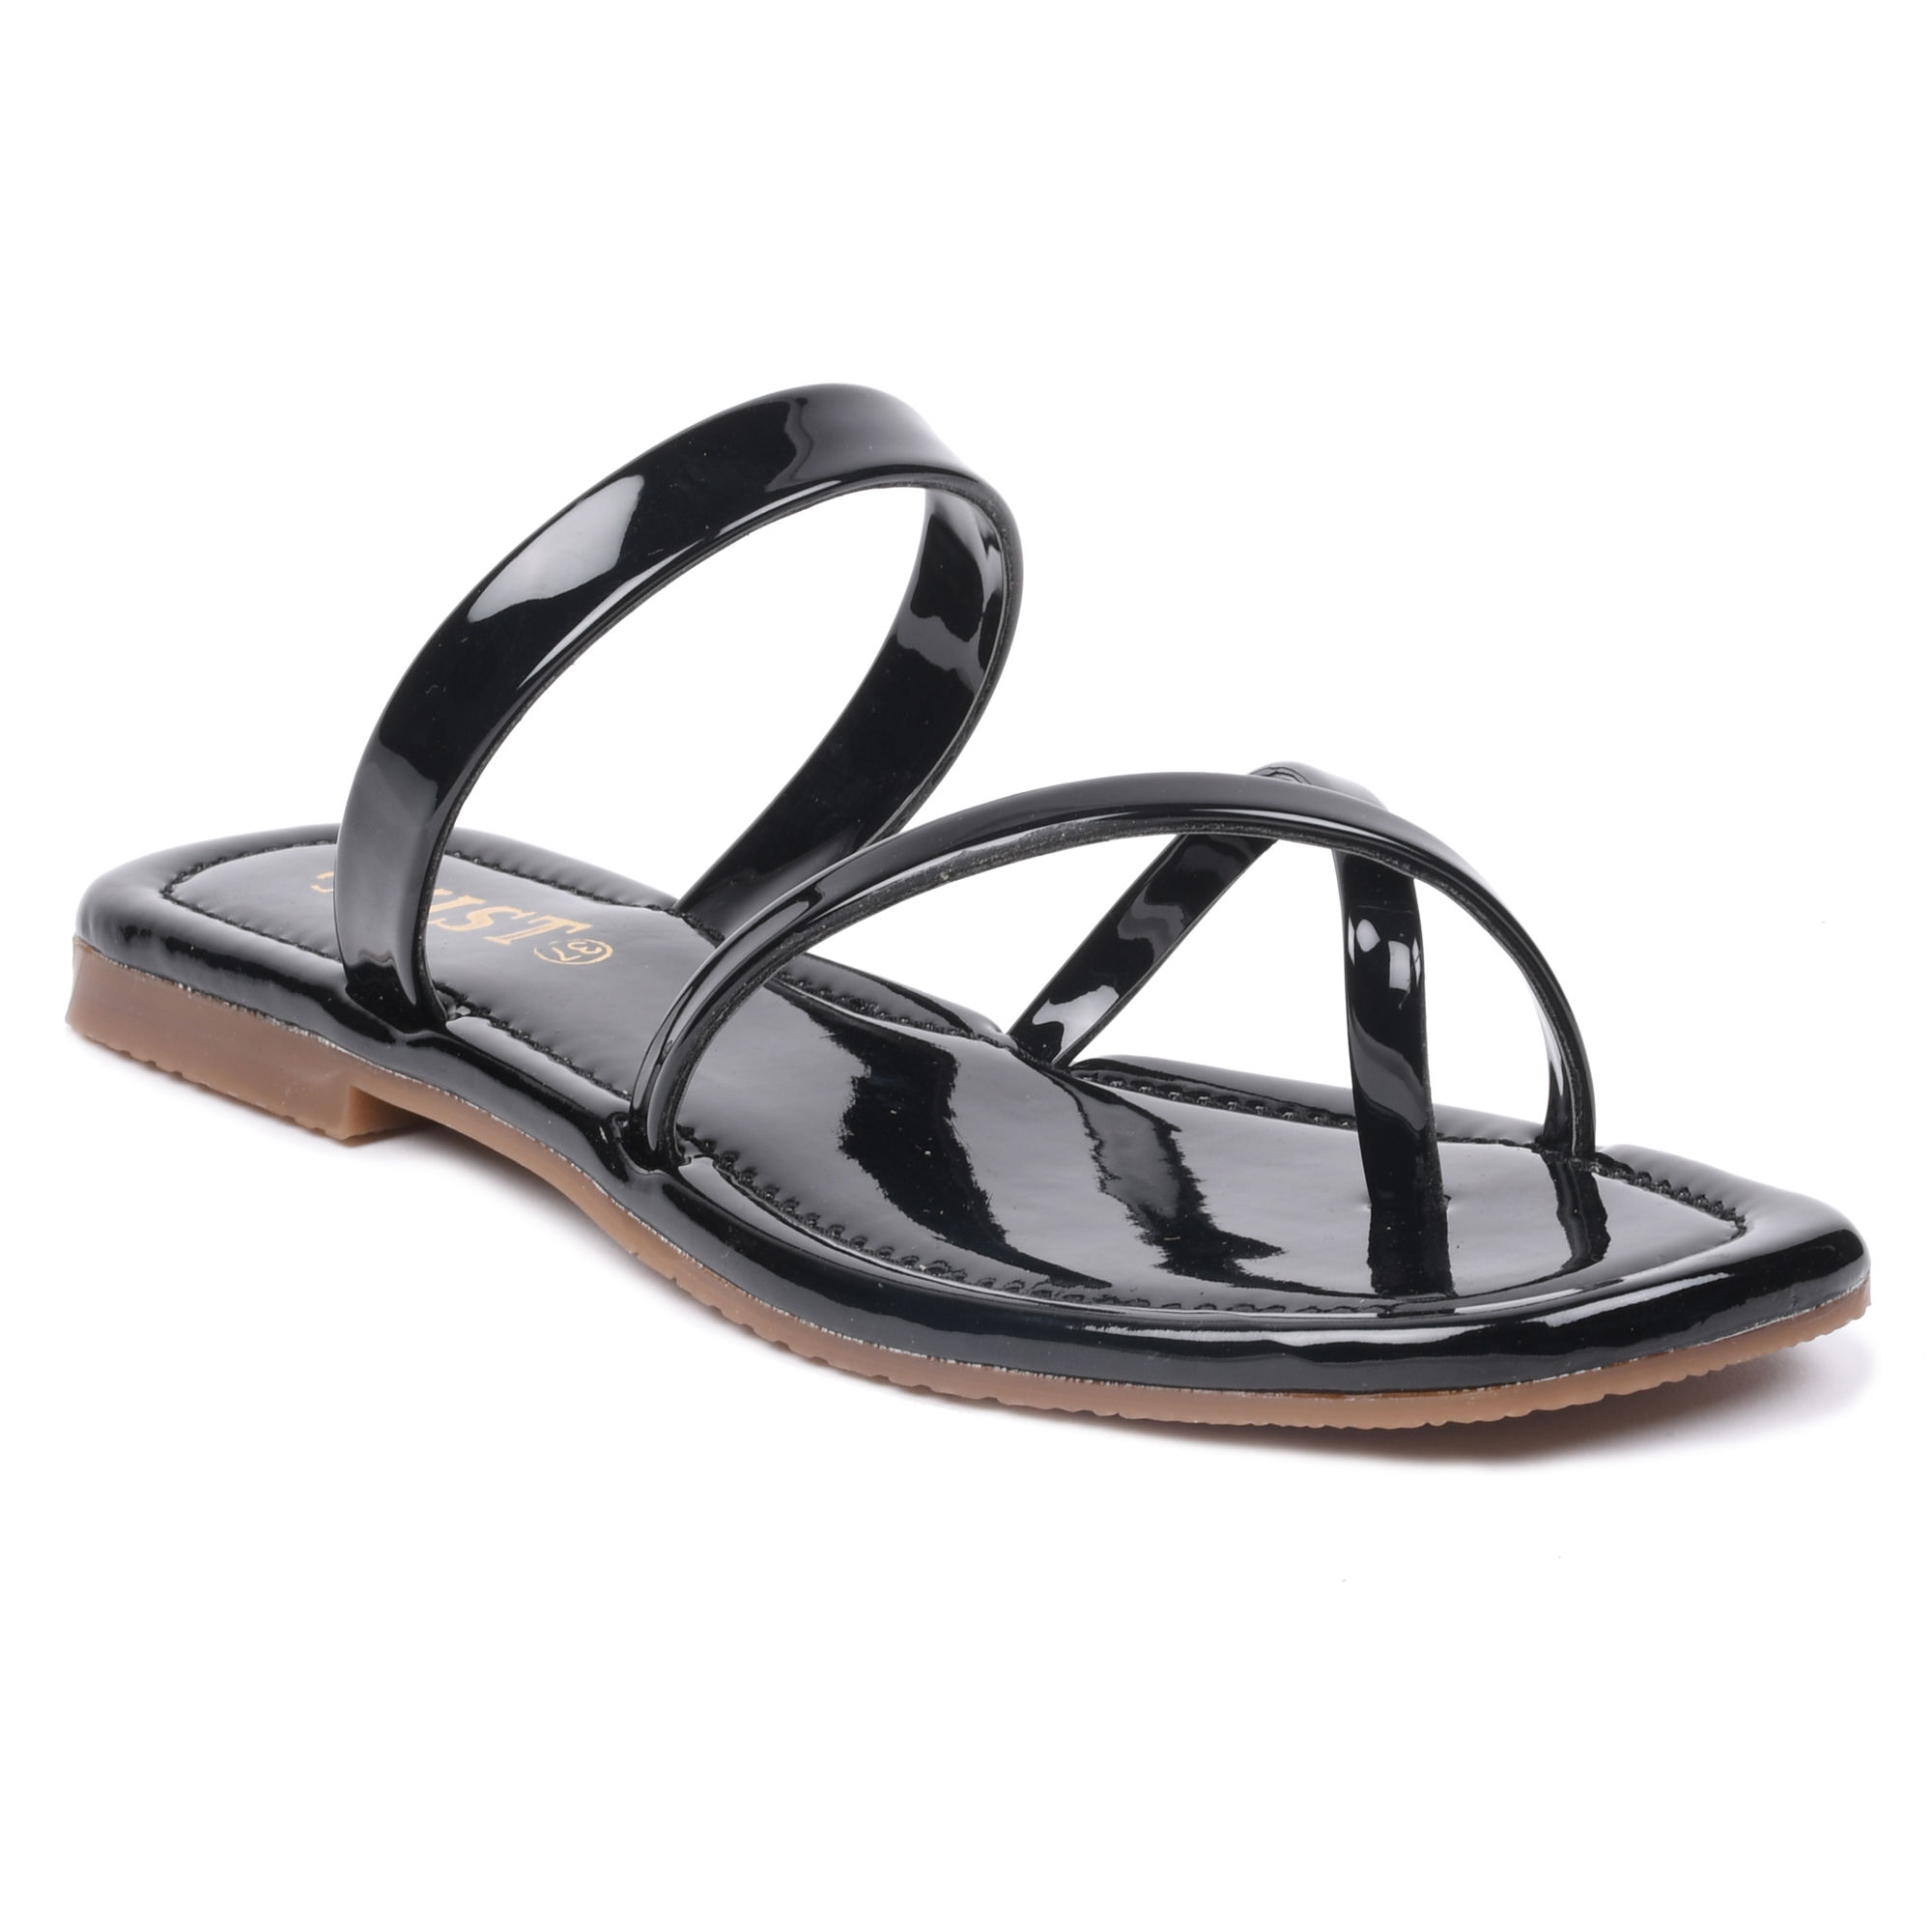 Top 80+ black patent flat sandals latest - dedaotaonec